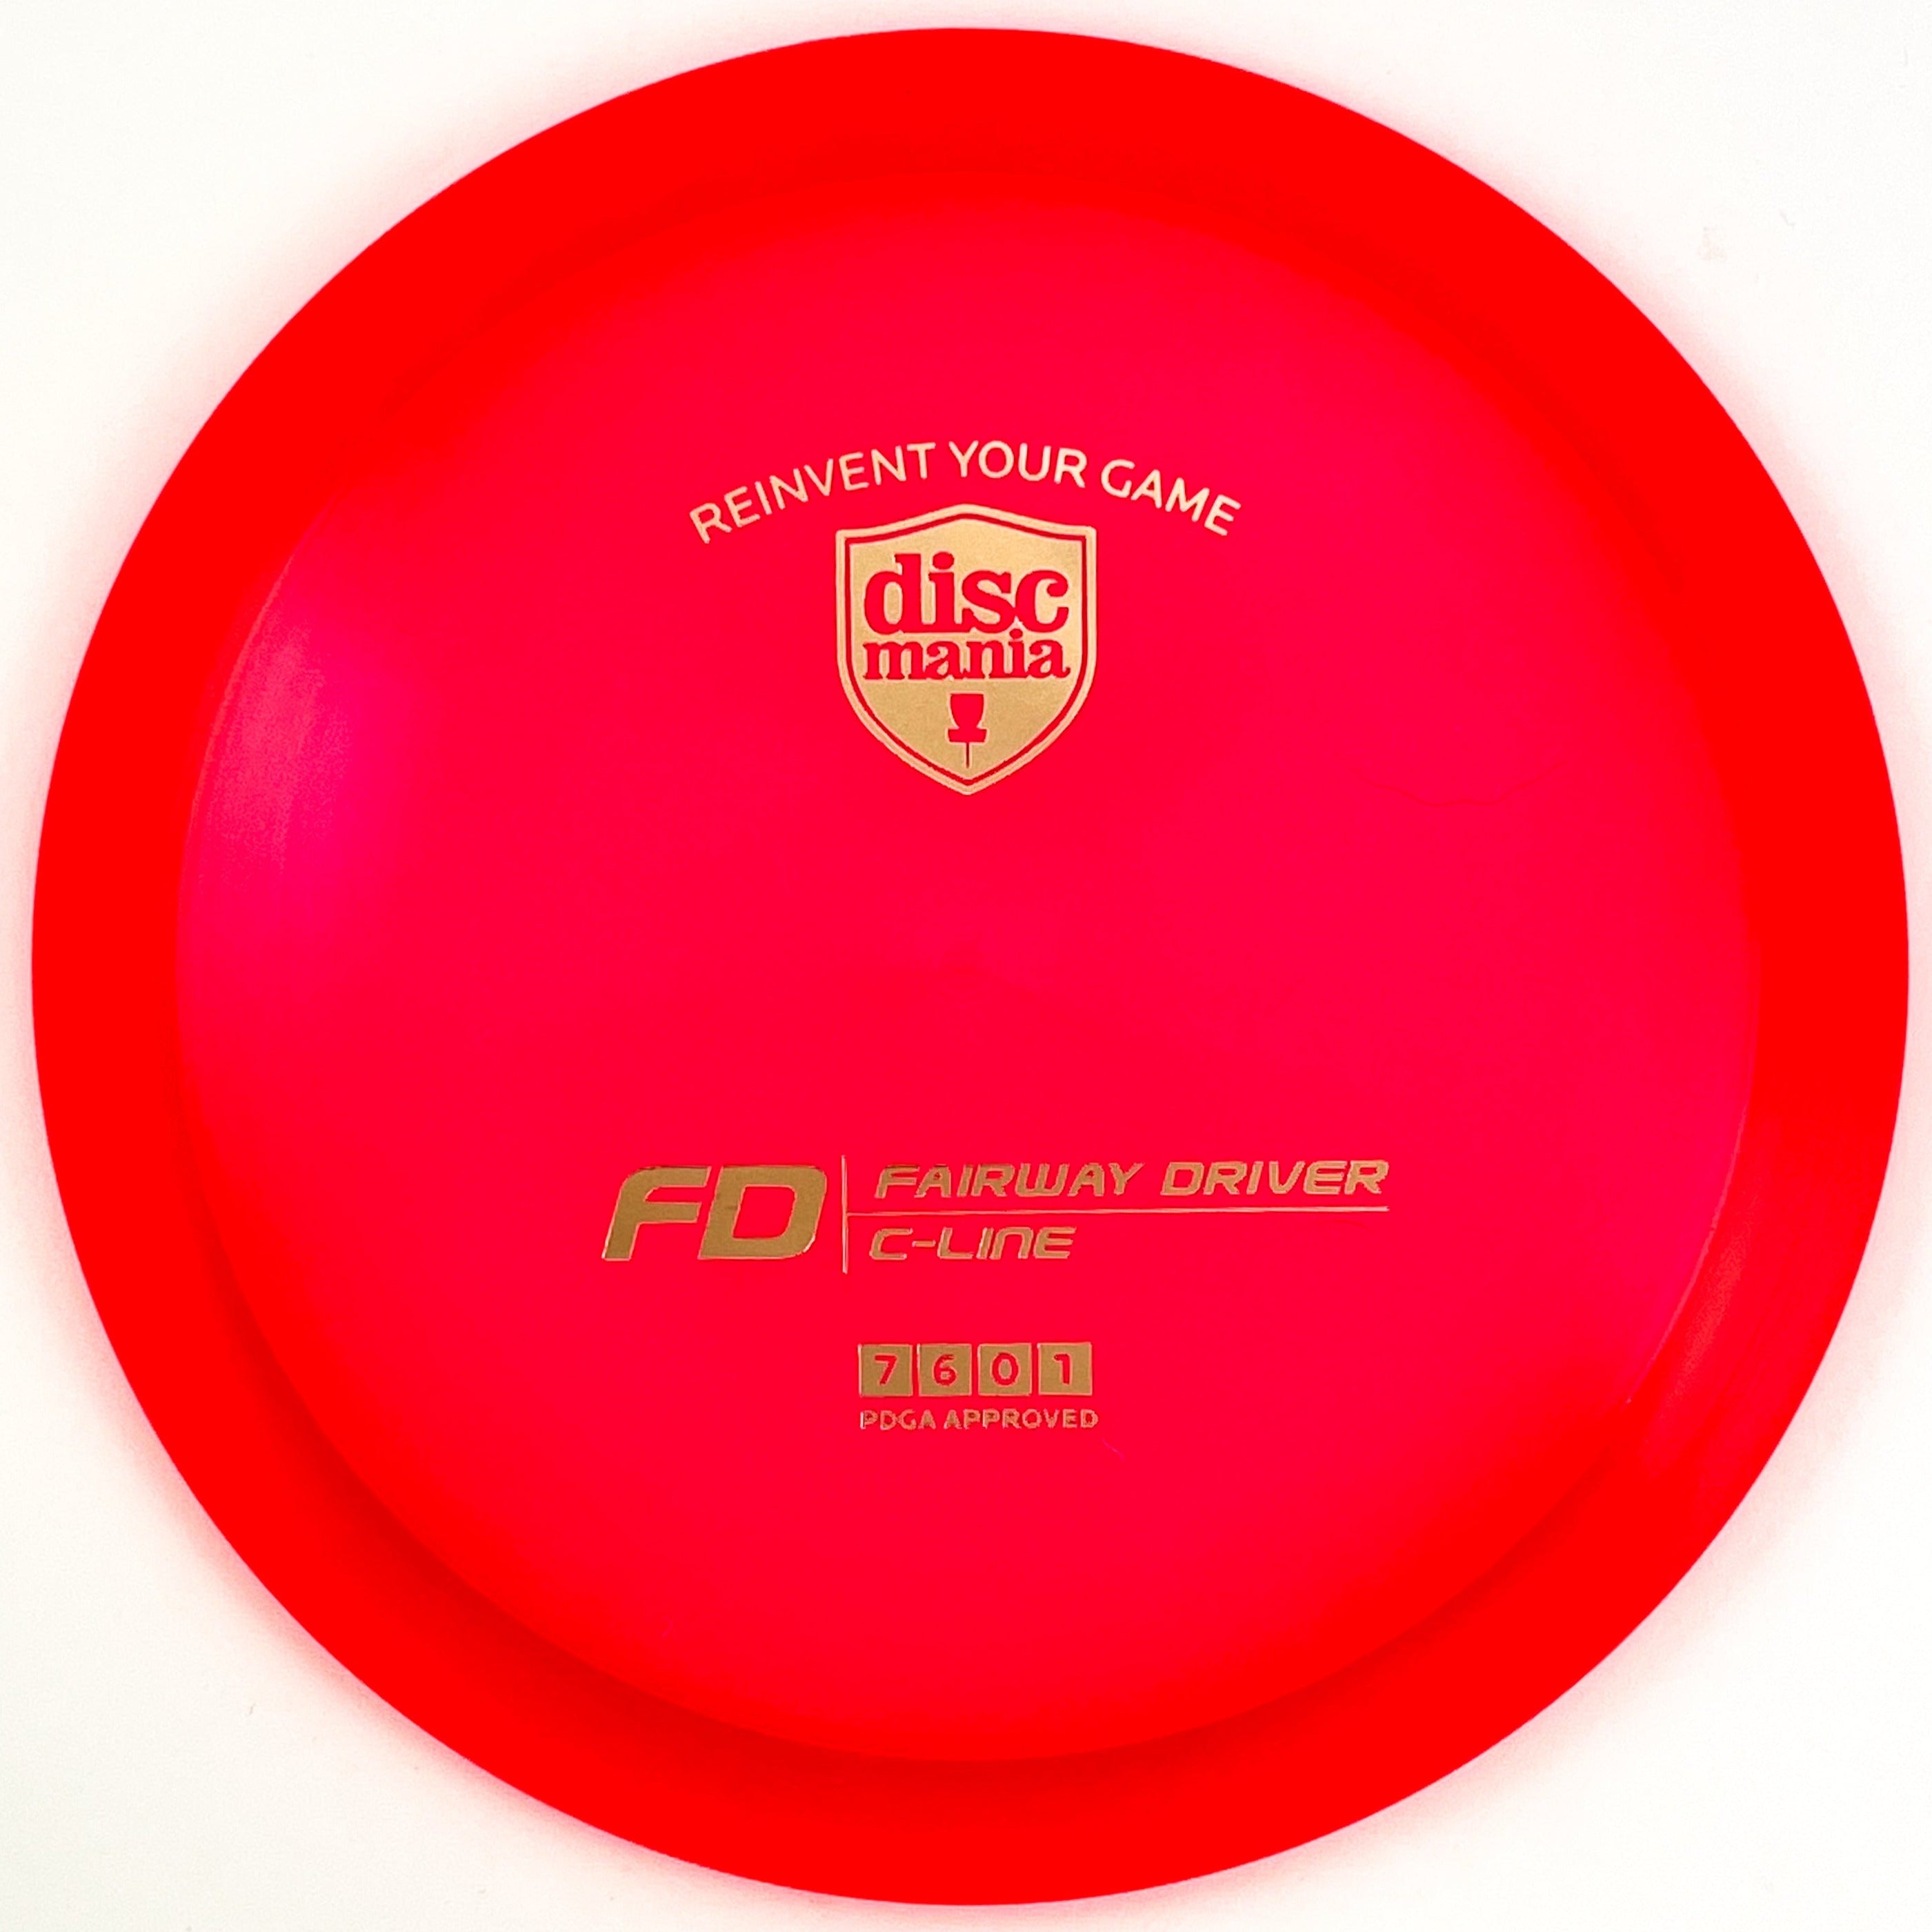 Discmania C-Line FD disc golf fairway driver by Discmania Golf Discs.